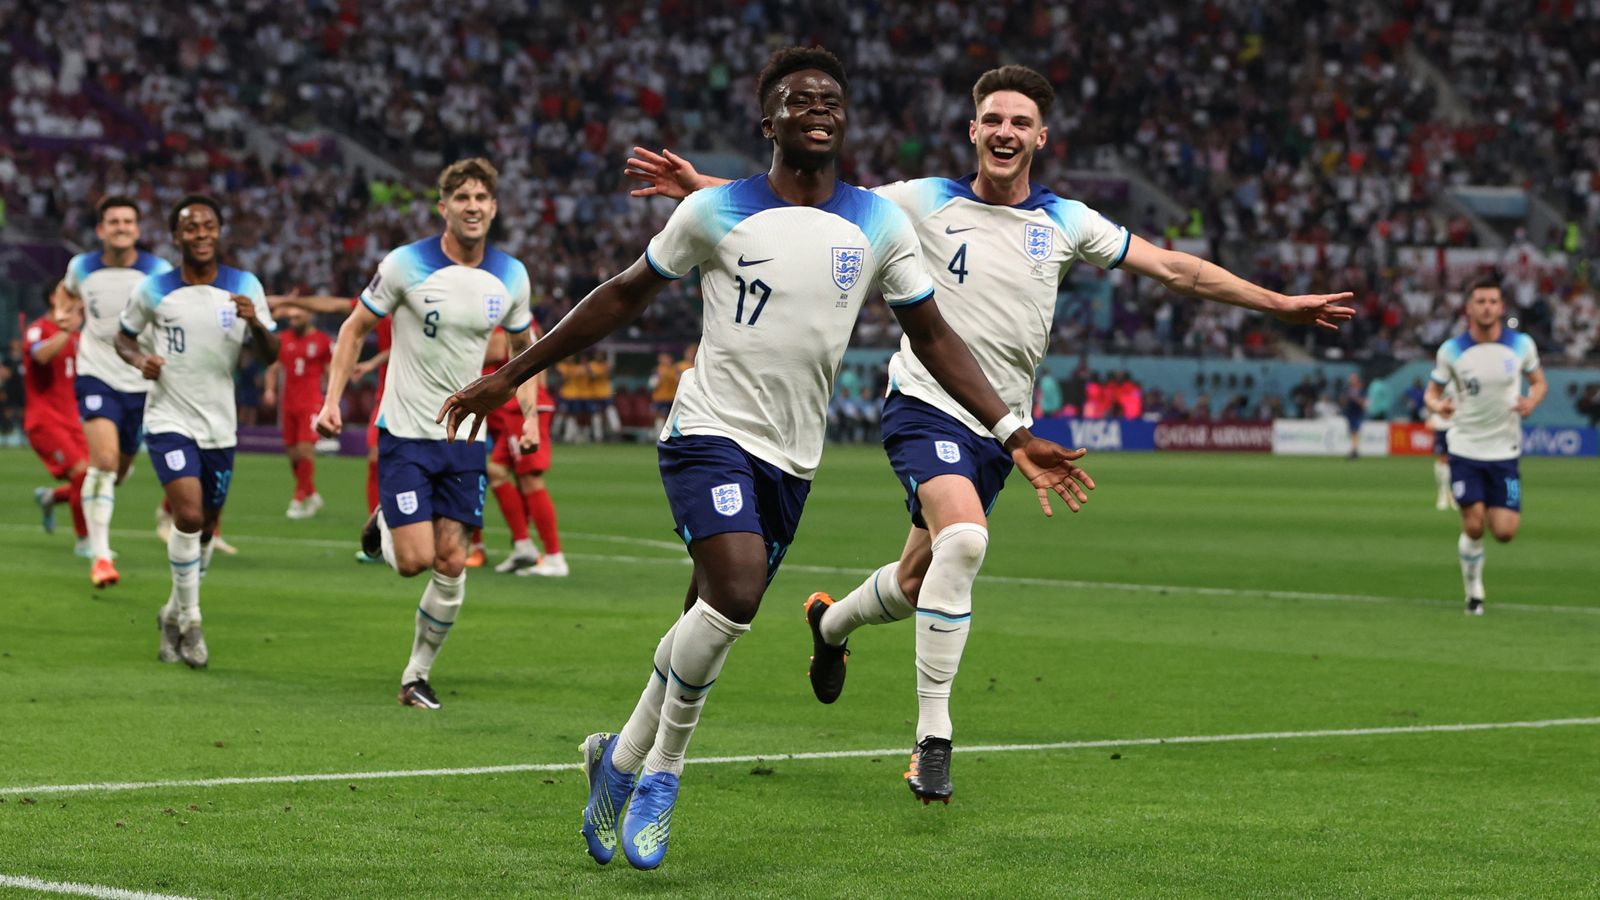 England make winning start to World Cup campaign in Qatar thrashing Iran